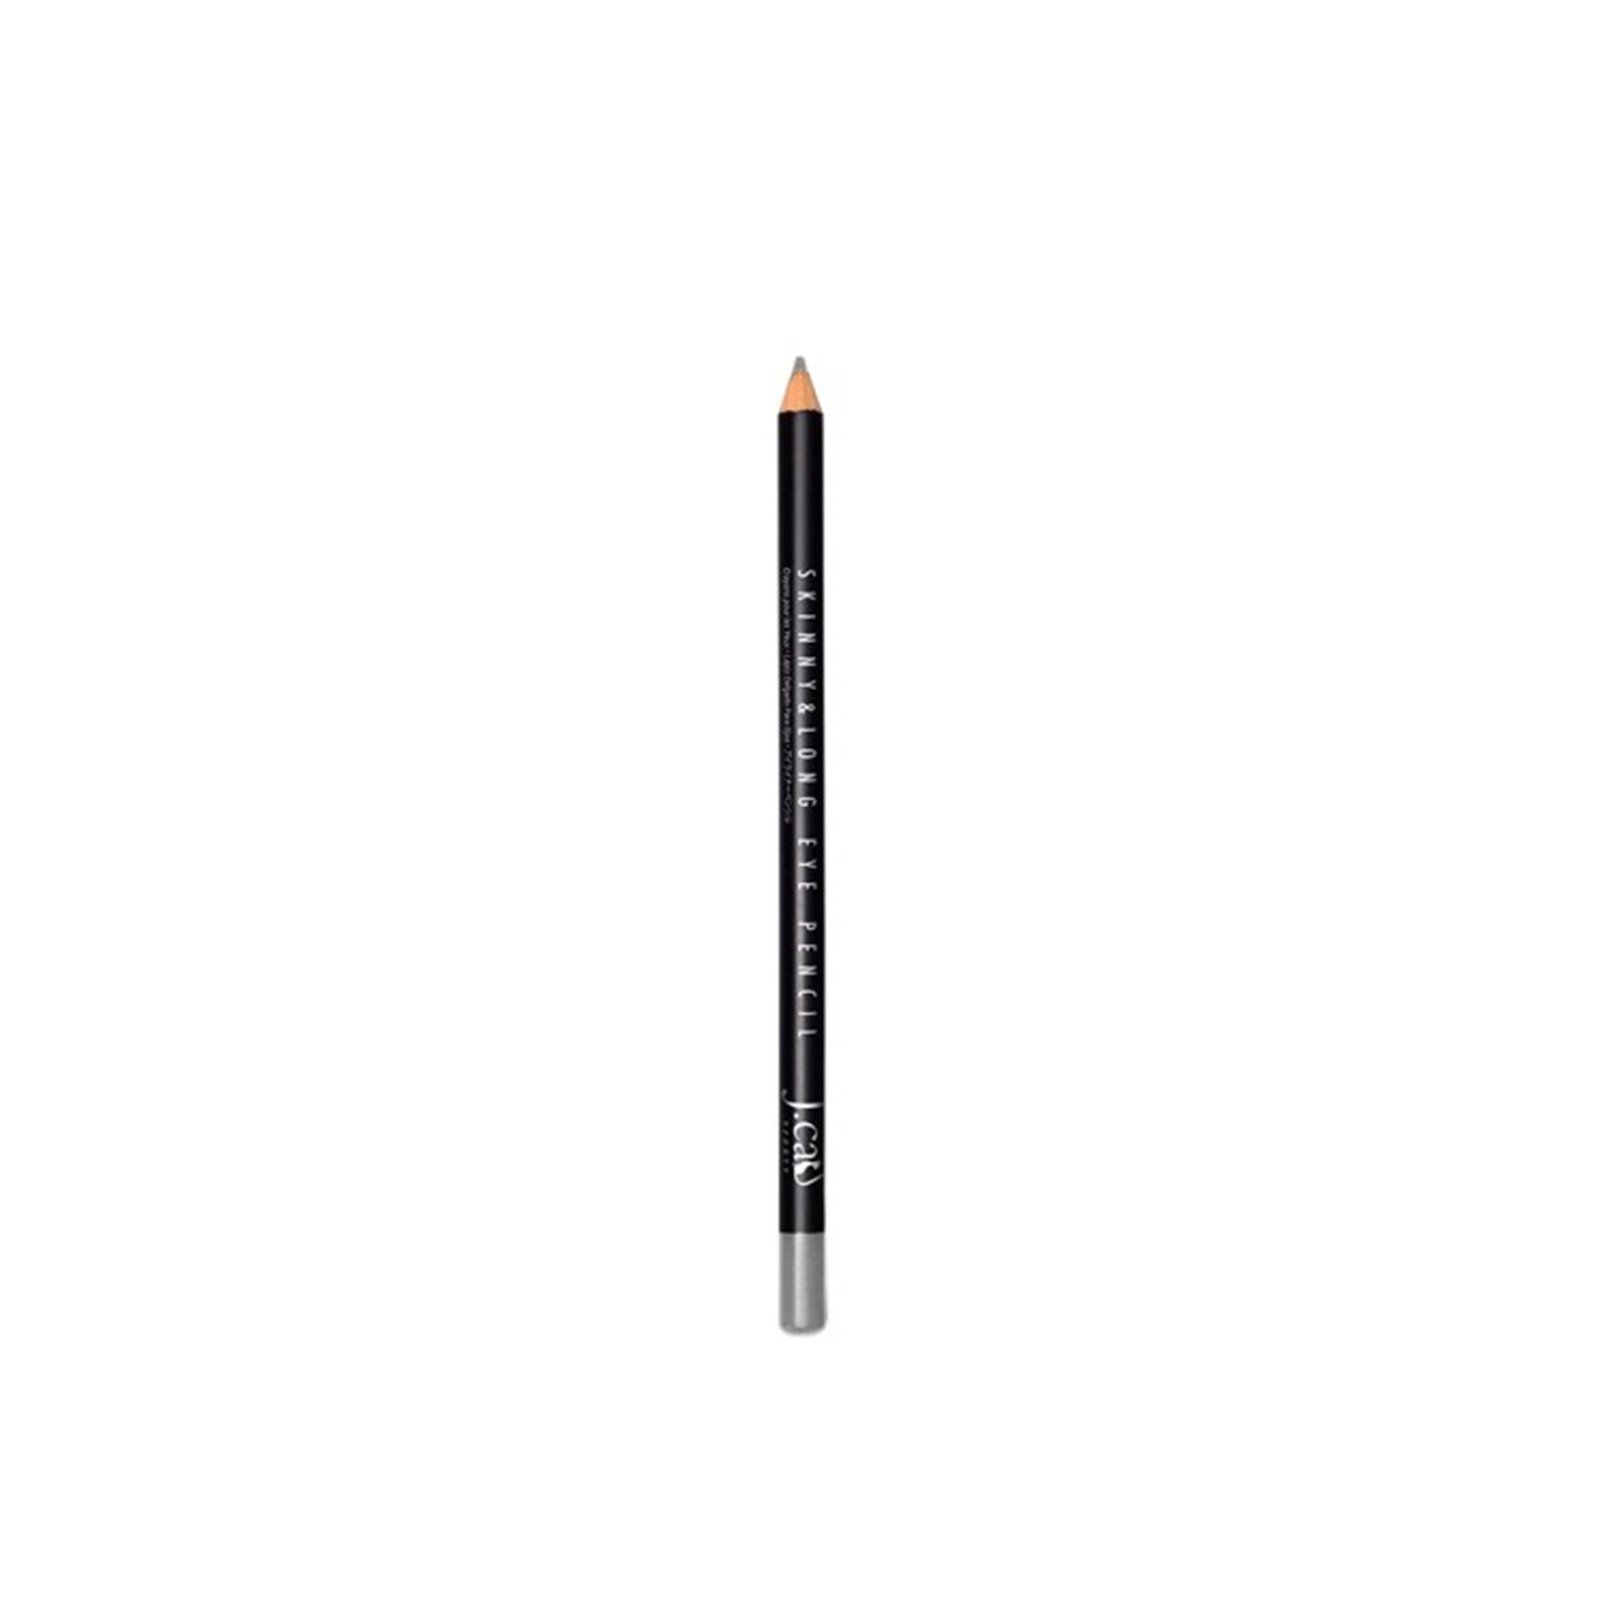 J.Cat Skinny & Long Eye Pencil 111 Ash Silver 2g (0.08 oz)